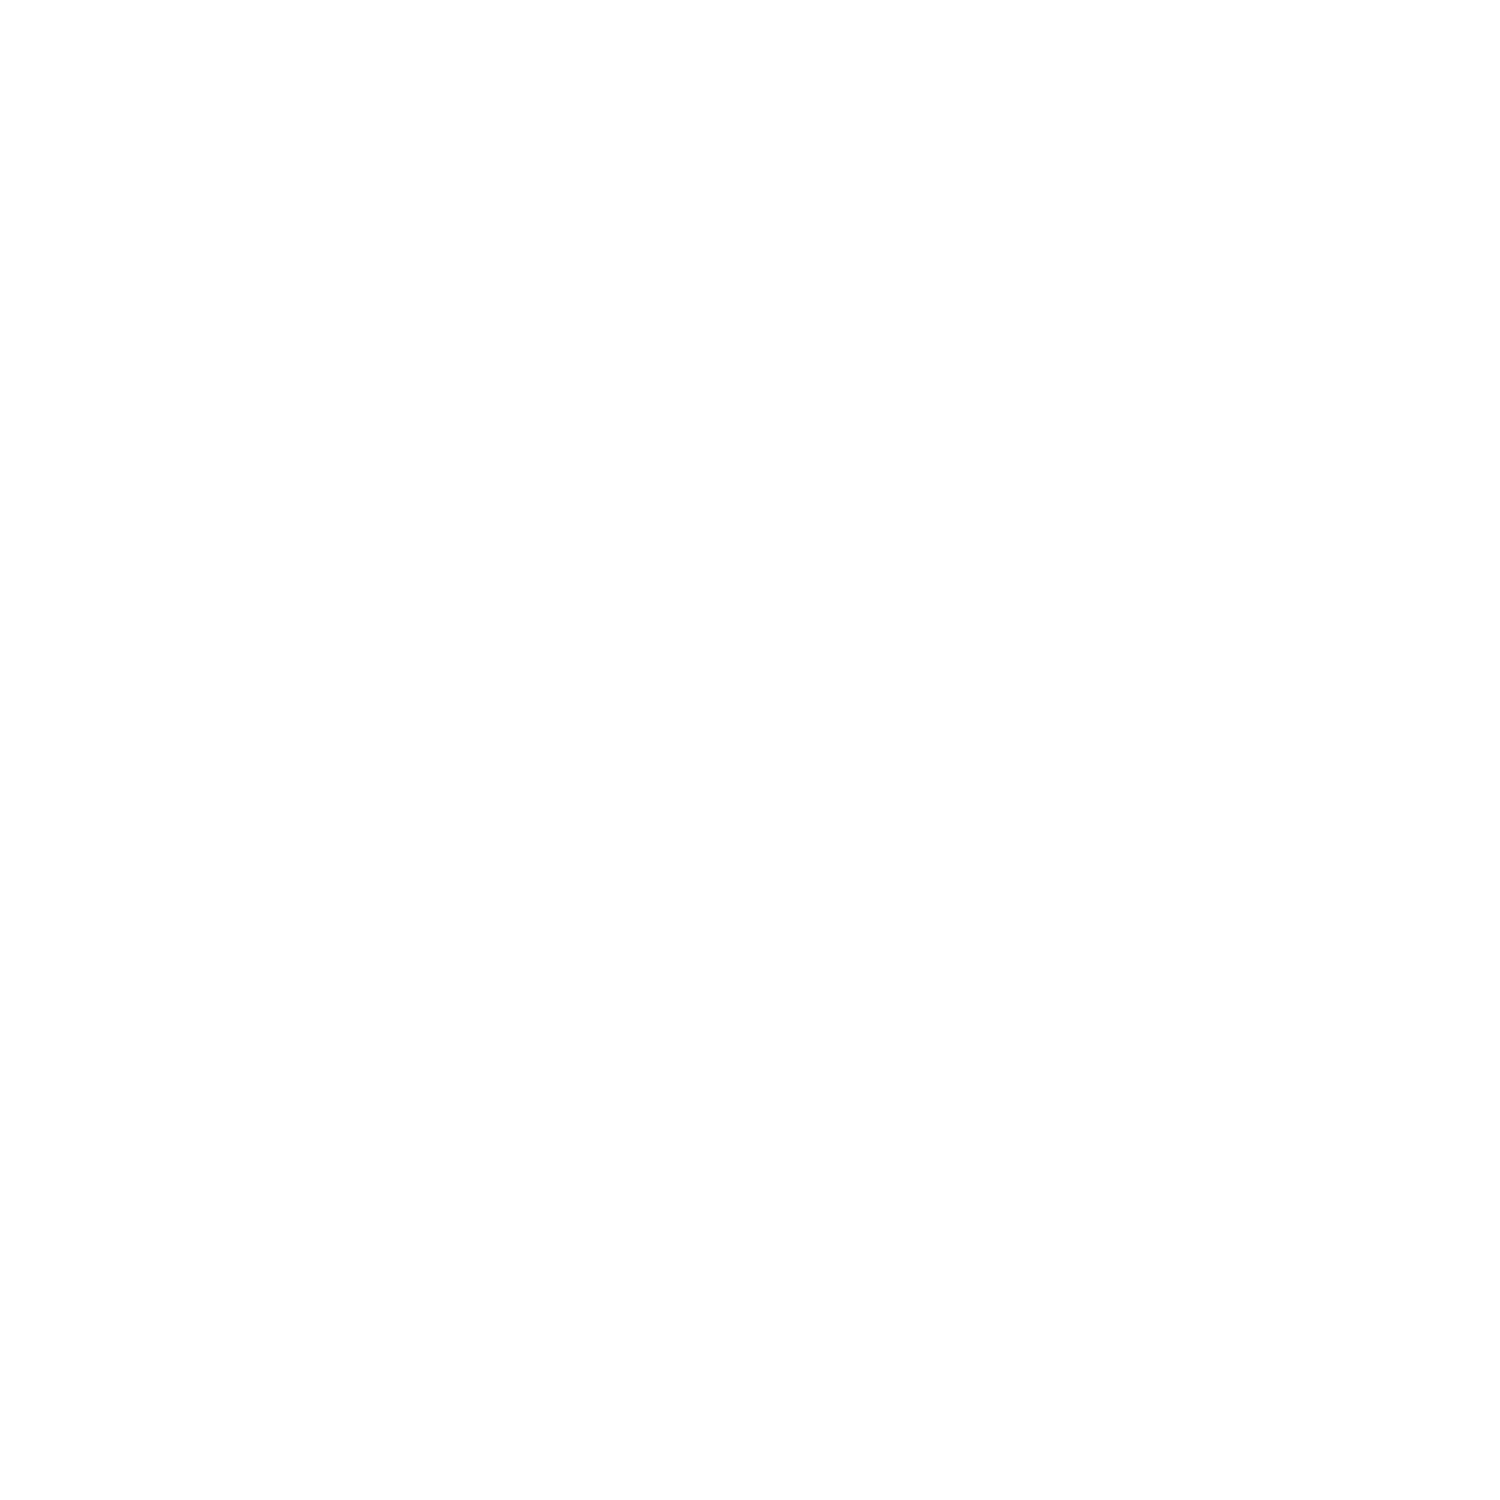 Suomalainen perheyritys logo